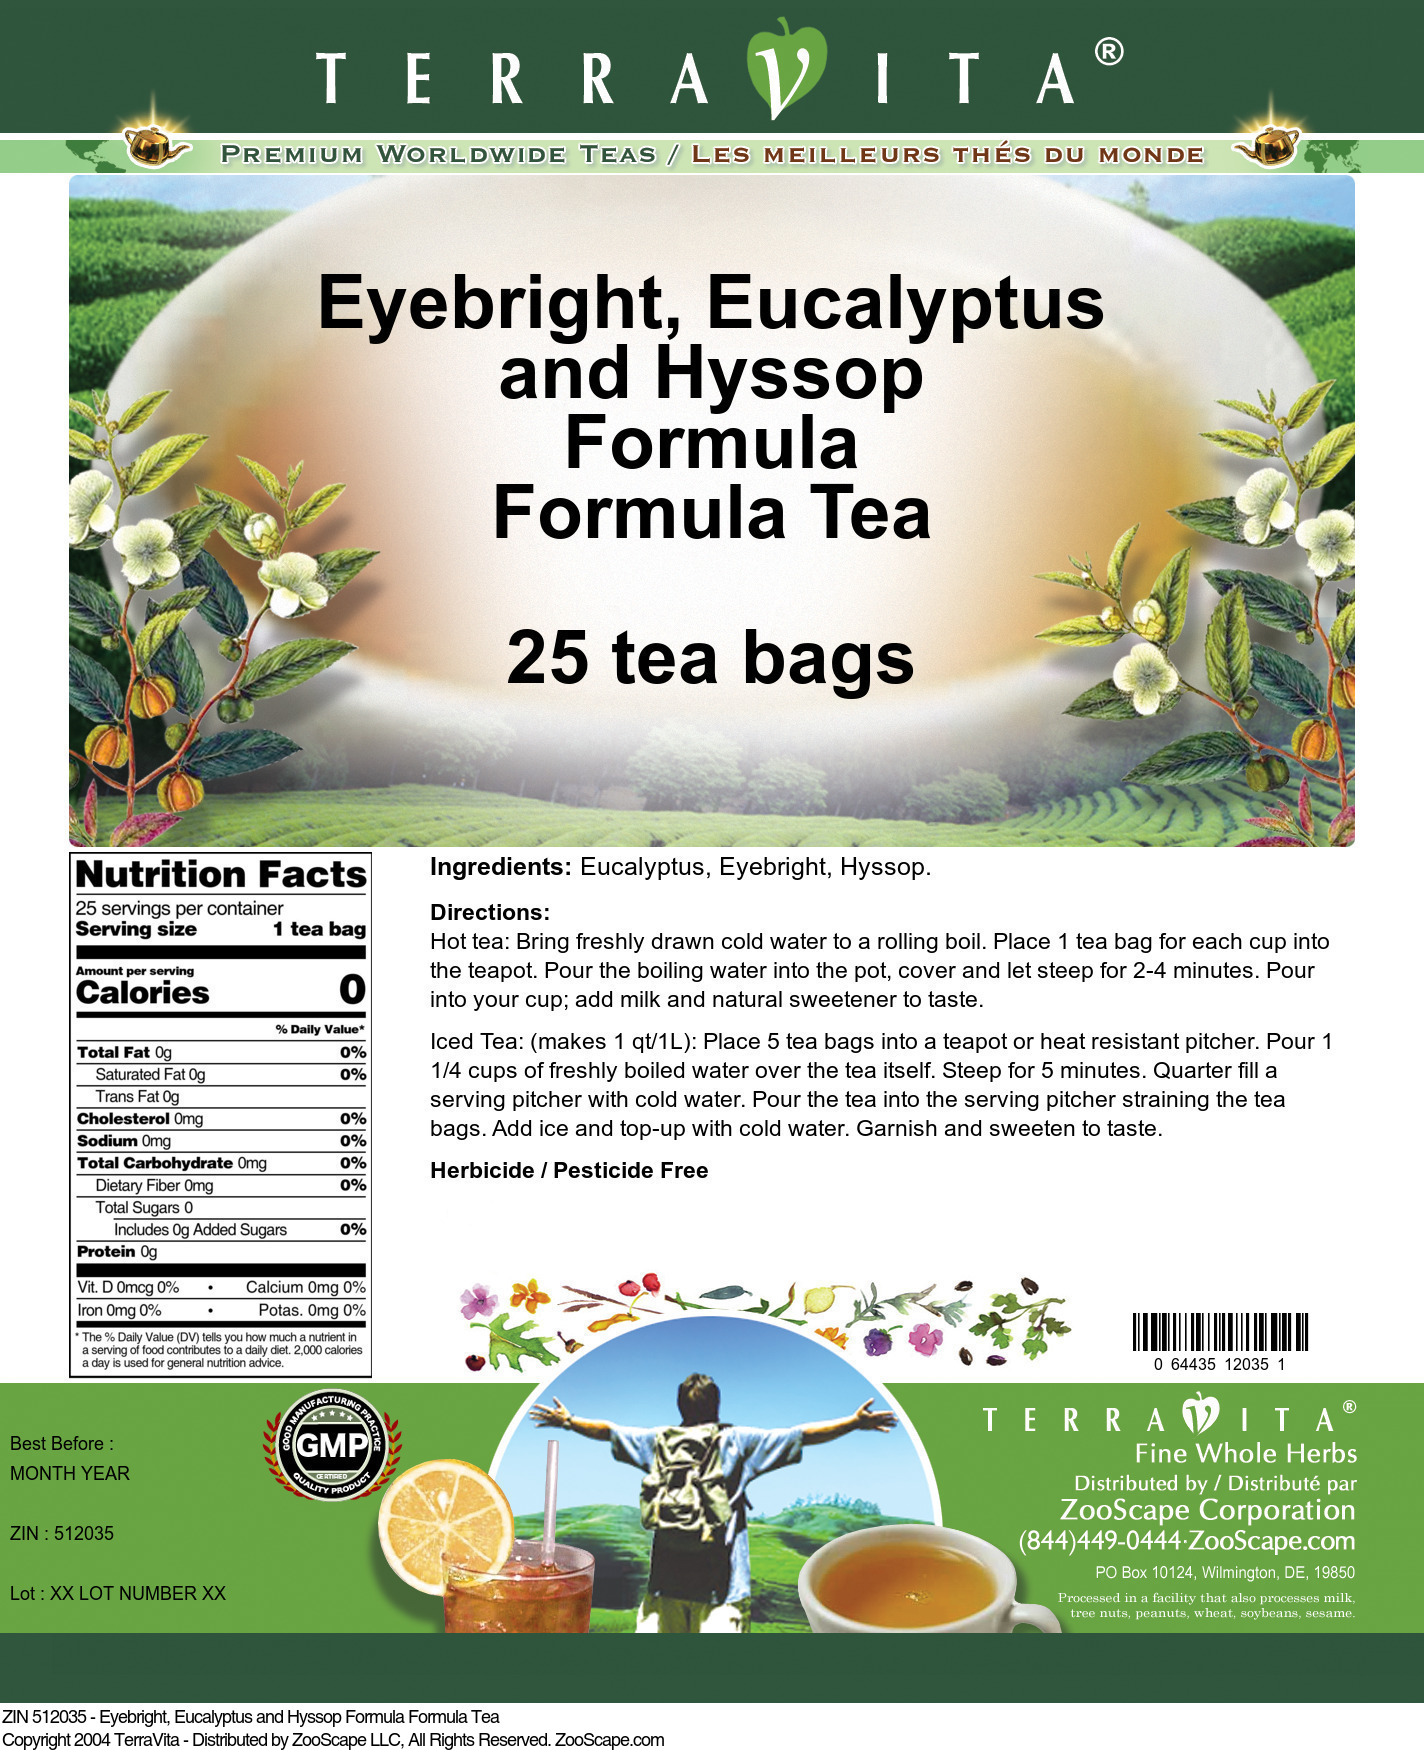 Eyebright, Eucalyptus and Hyssop Formula Formula Tea - Label